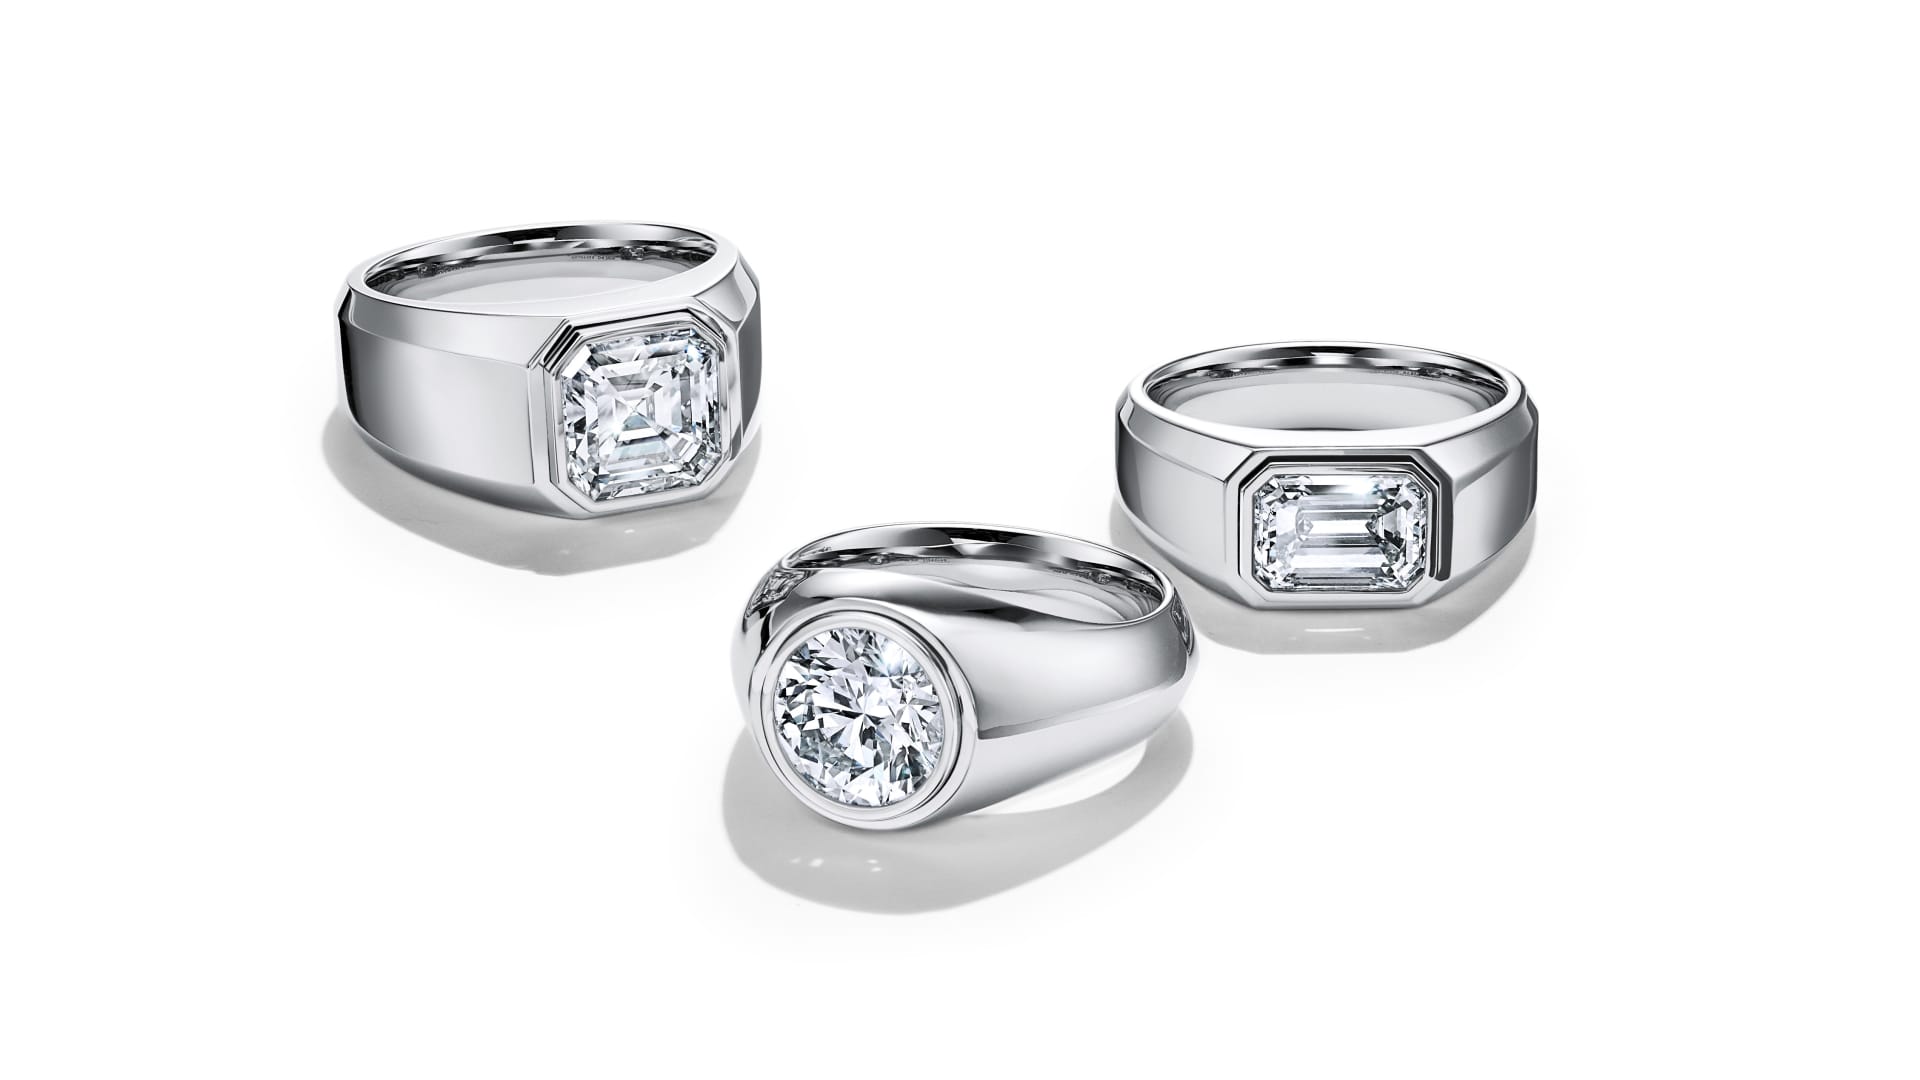 Hen hemel Reflectie Tiffany is now selling men's engagement rings, embracing inclusivity